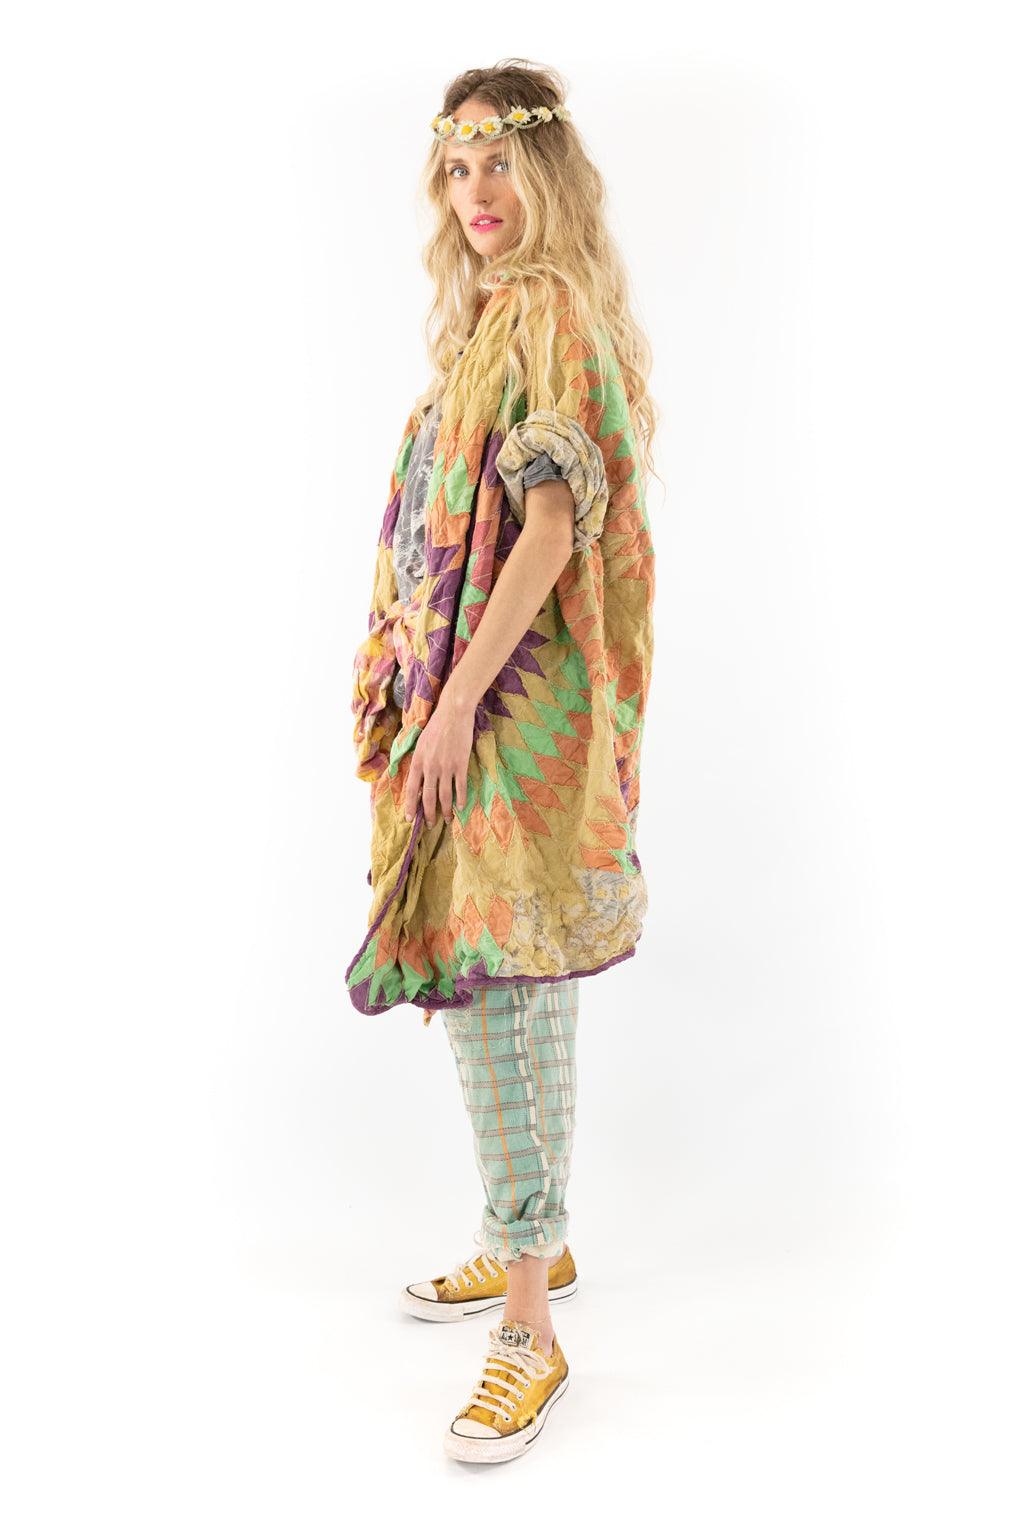 Archie Quiltwork Kimono - Magnolia Pearl Clothing